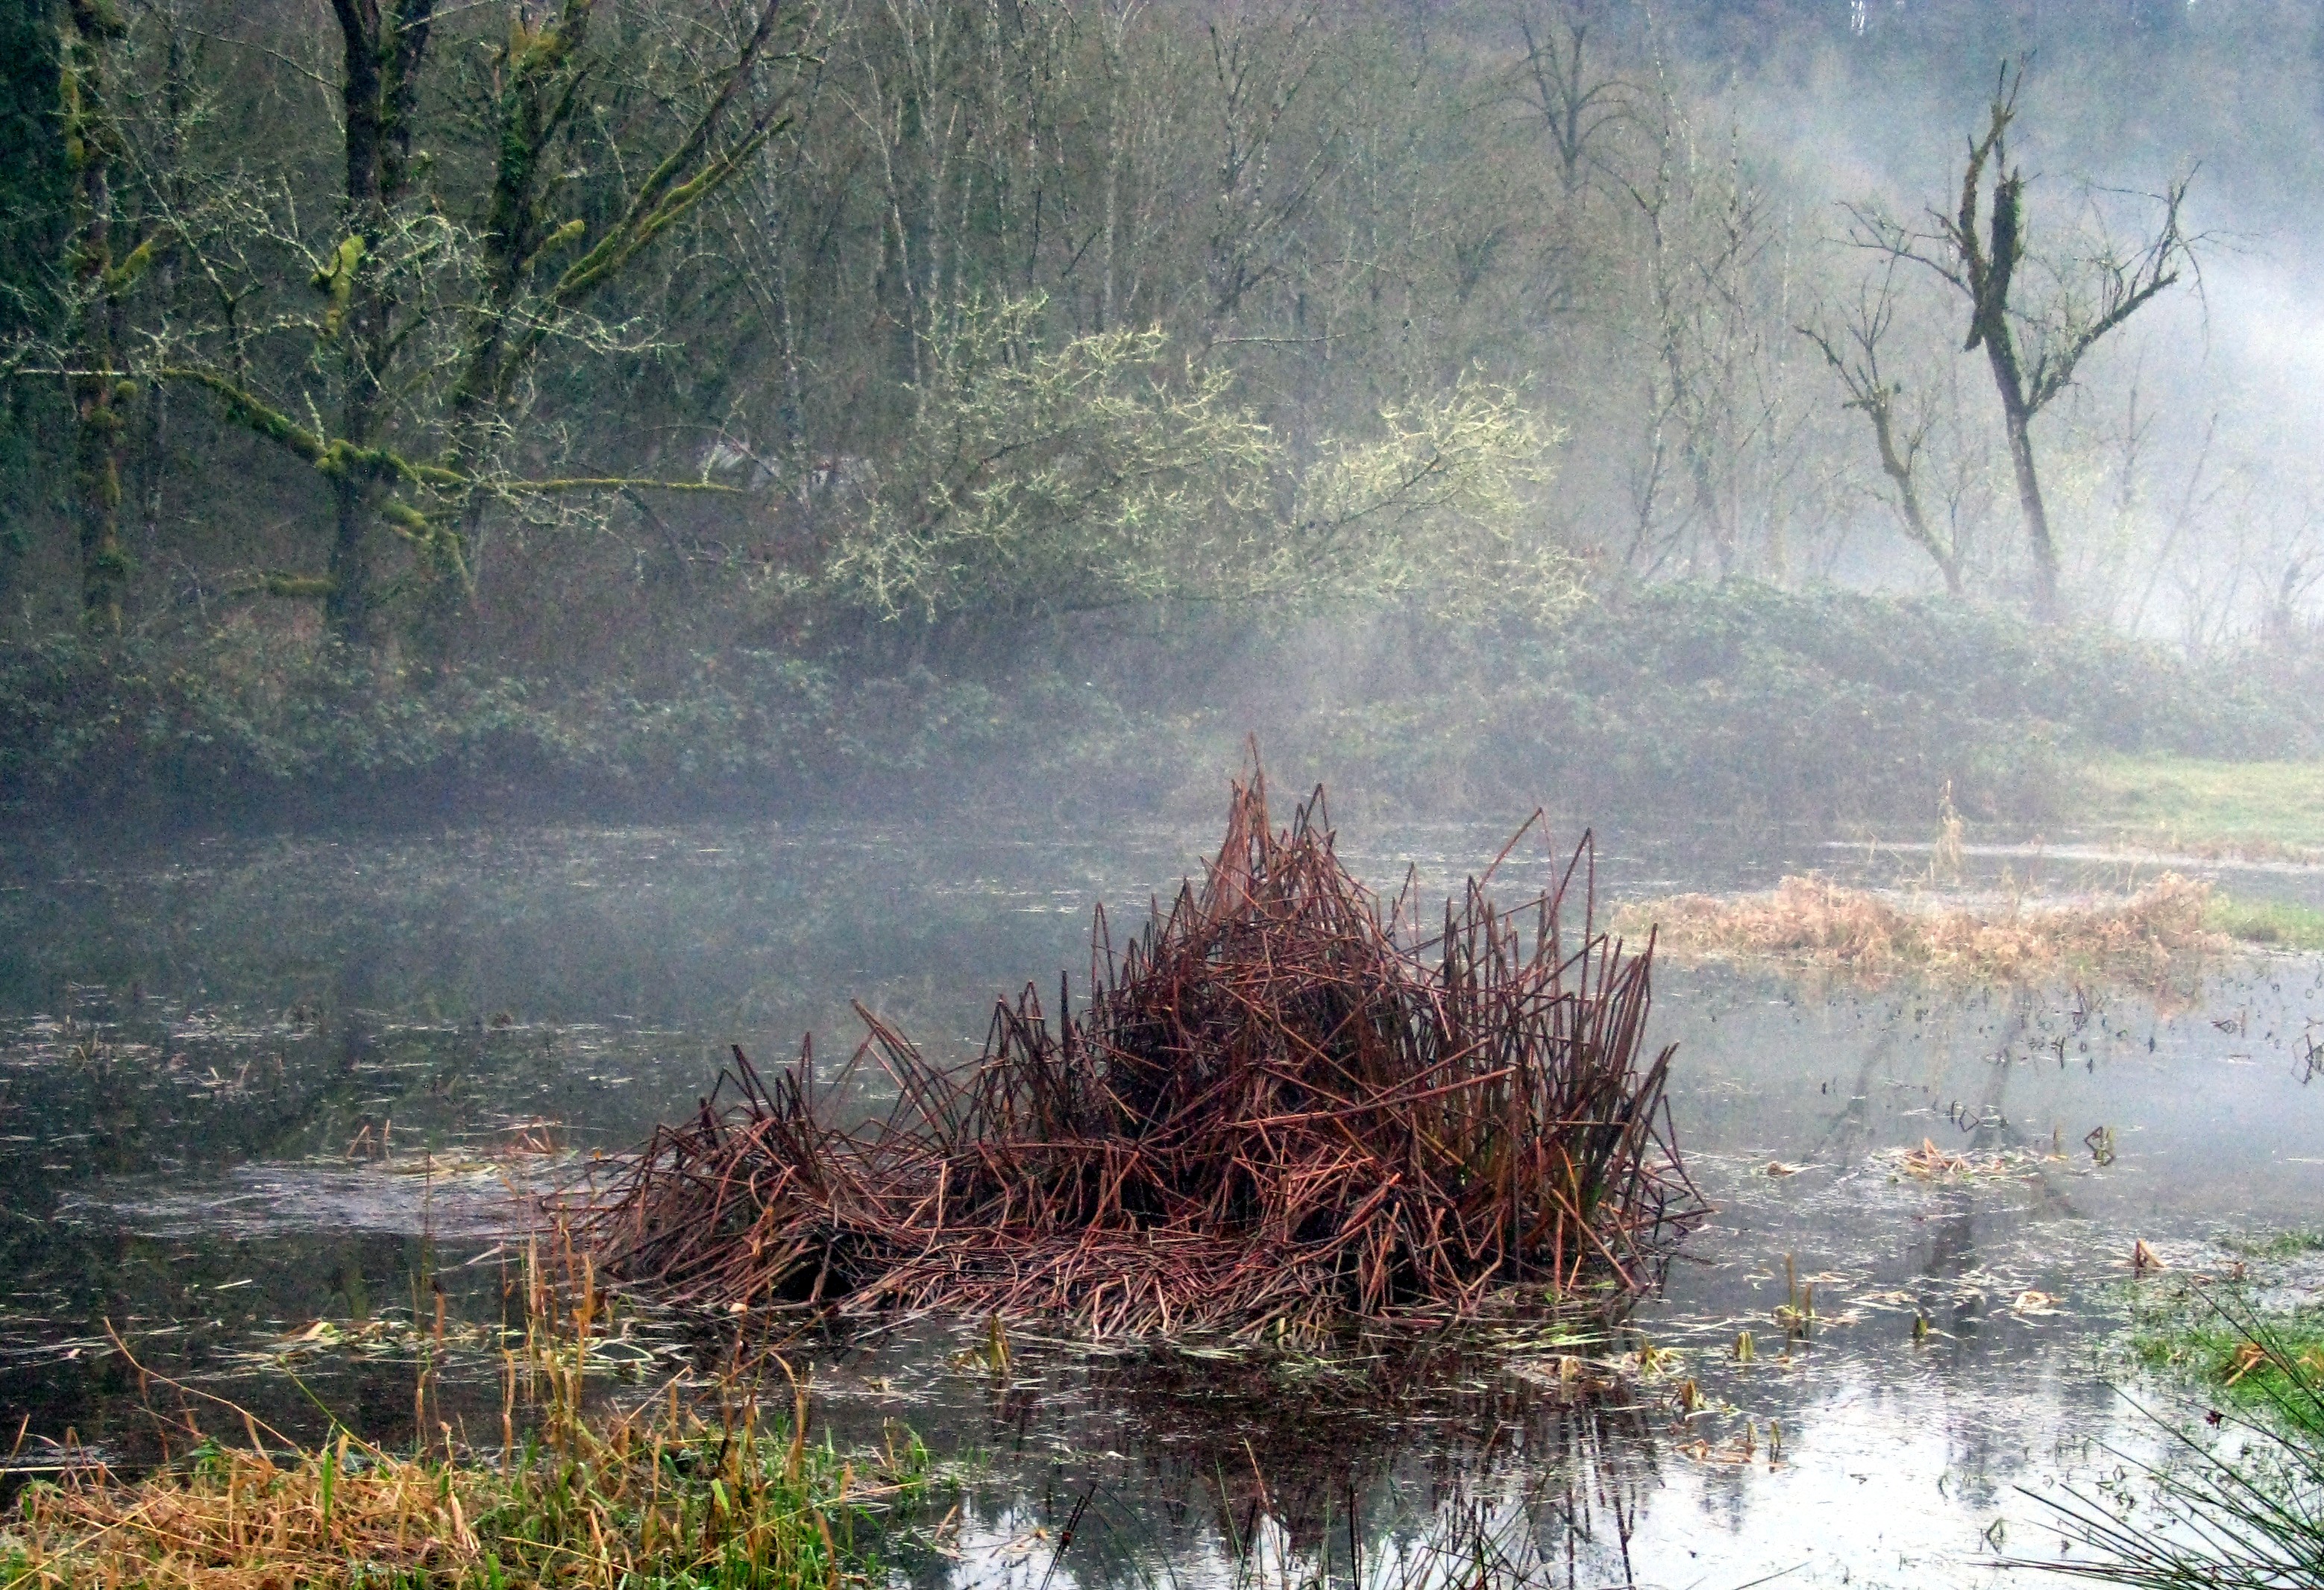 Flaming Geyser pond